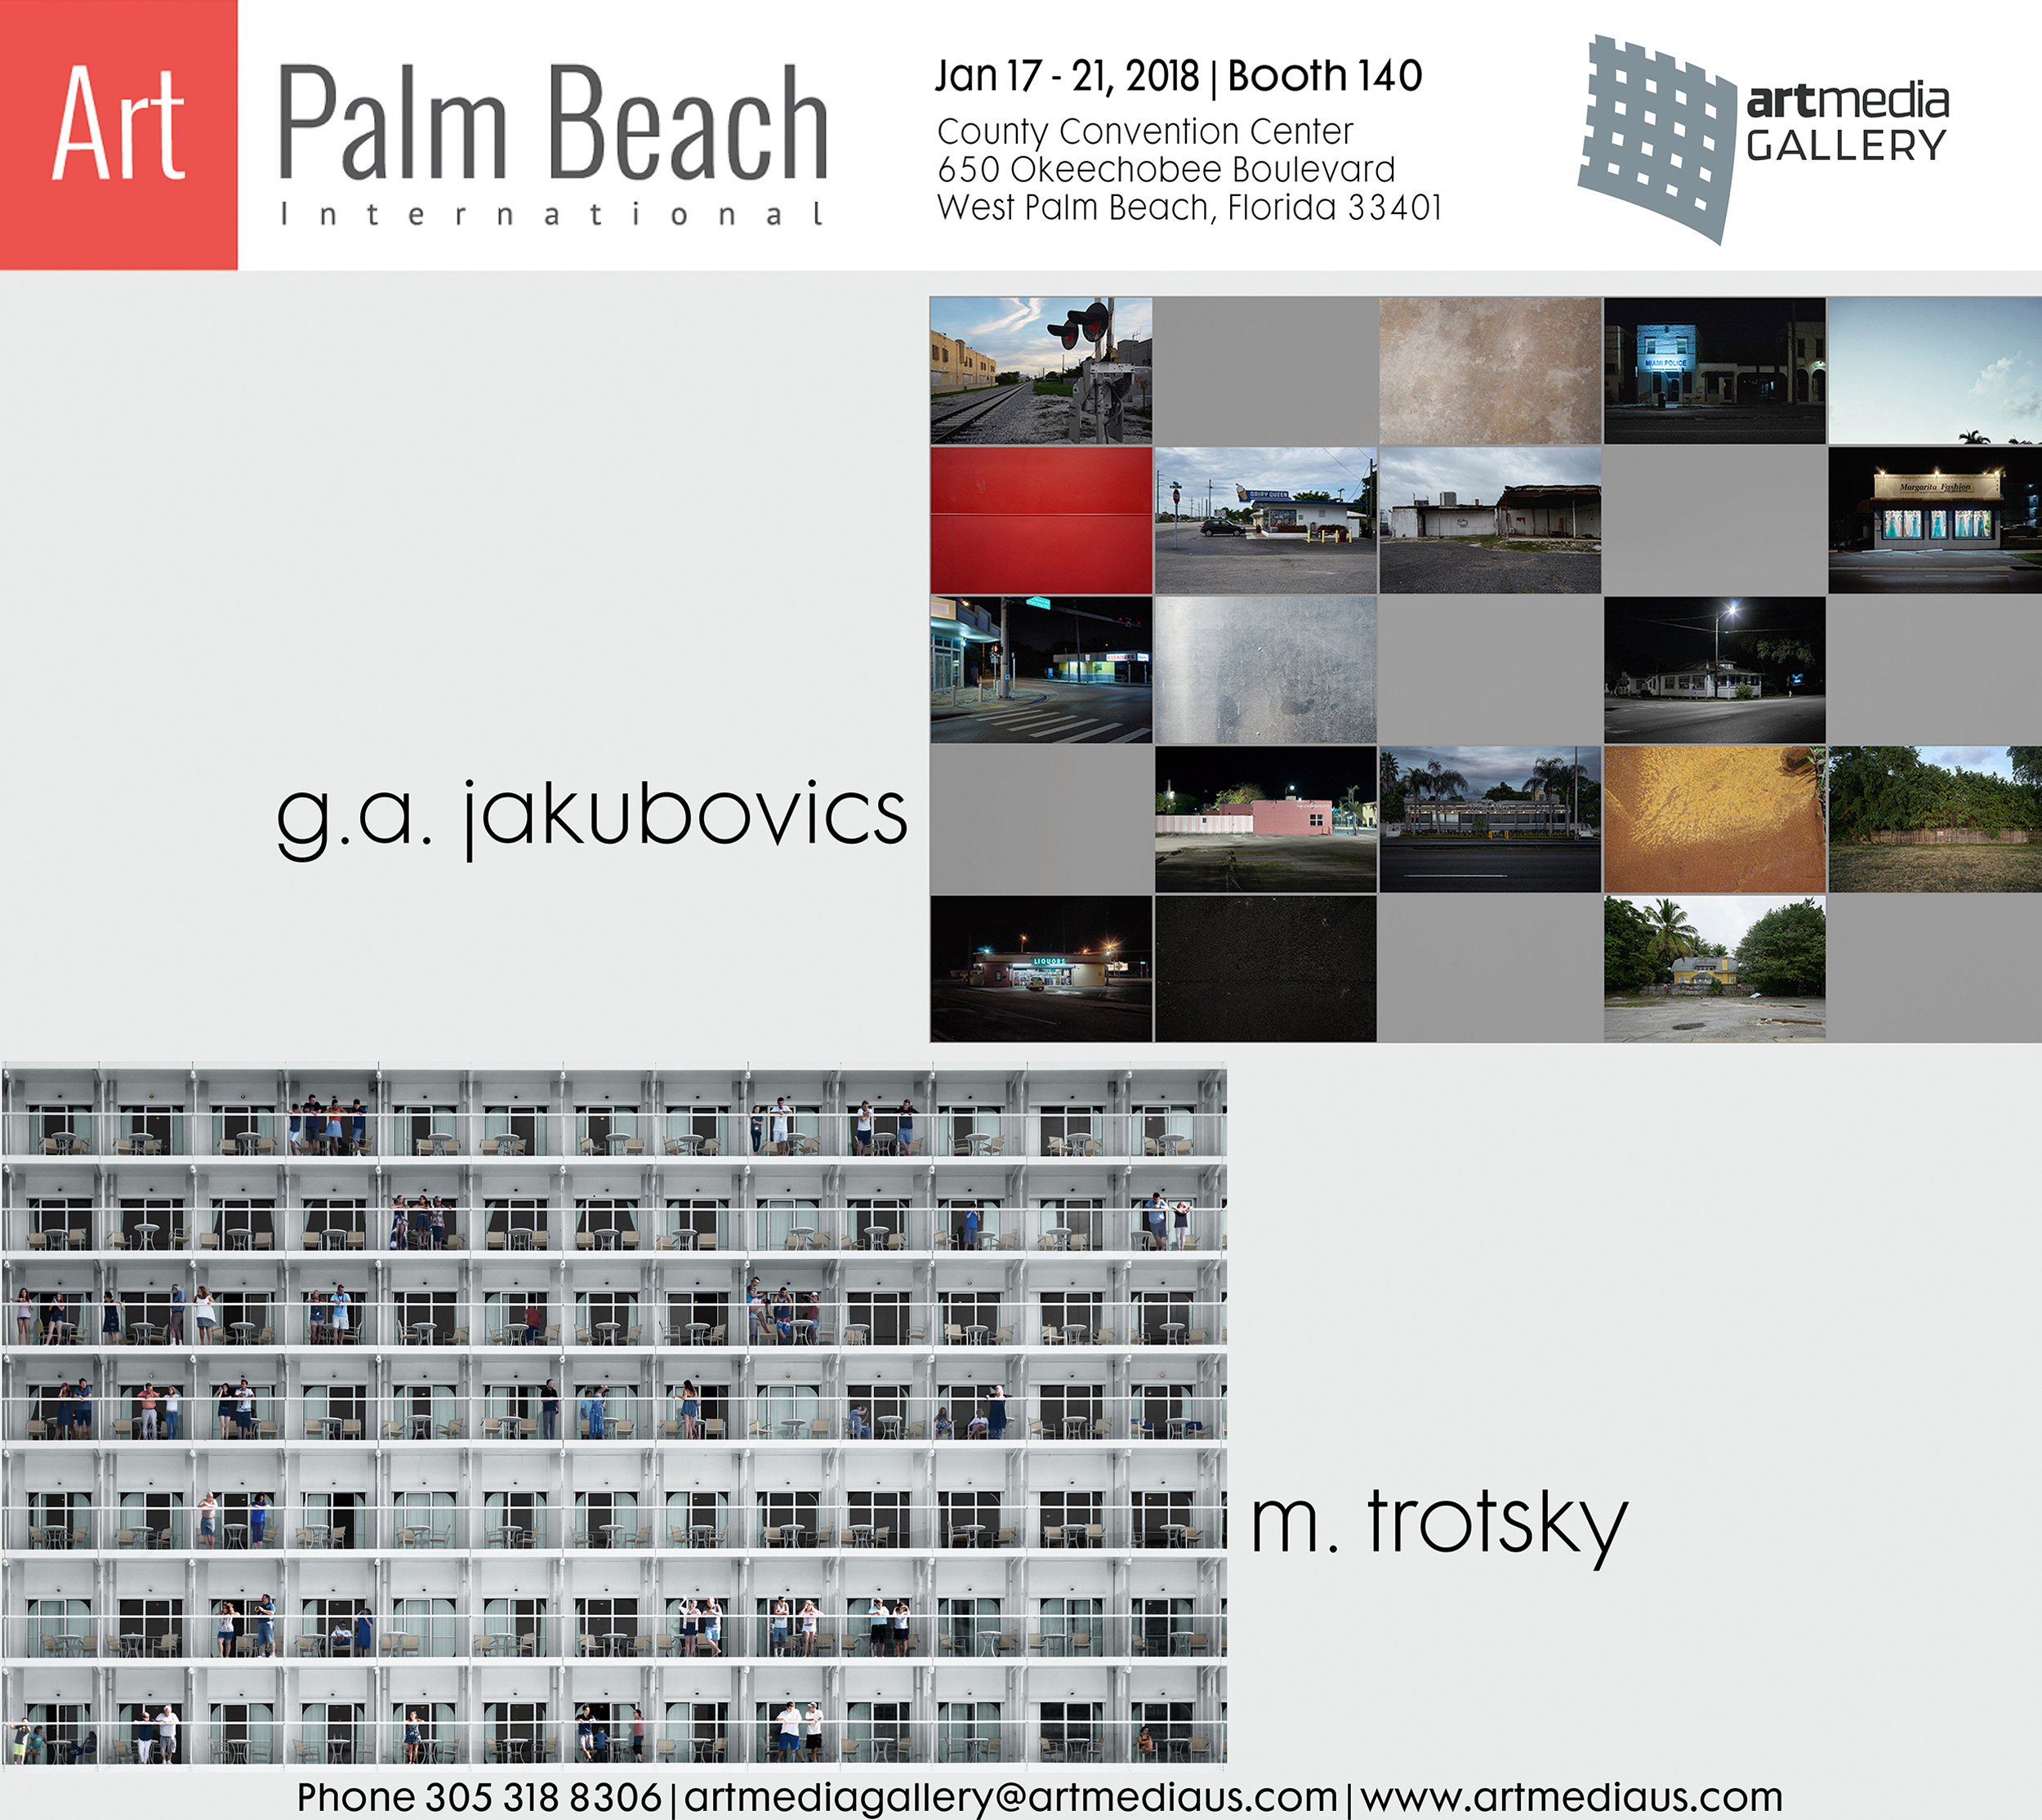 Art Palm Beach | artmedia GALLERY | Booth: 140 | Jan 17, 2018